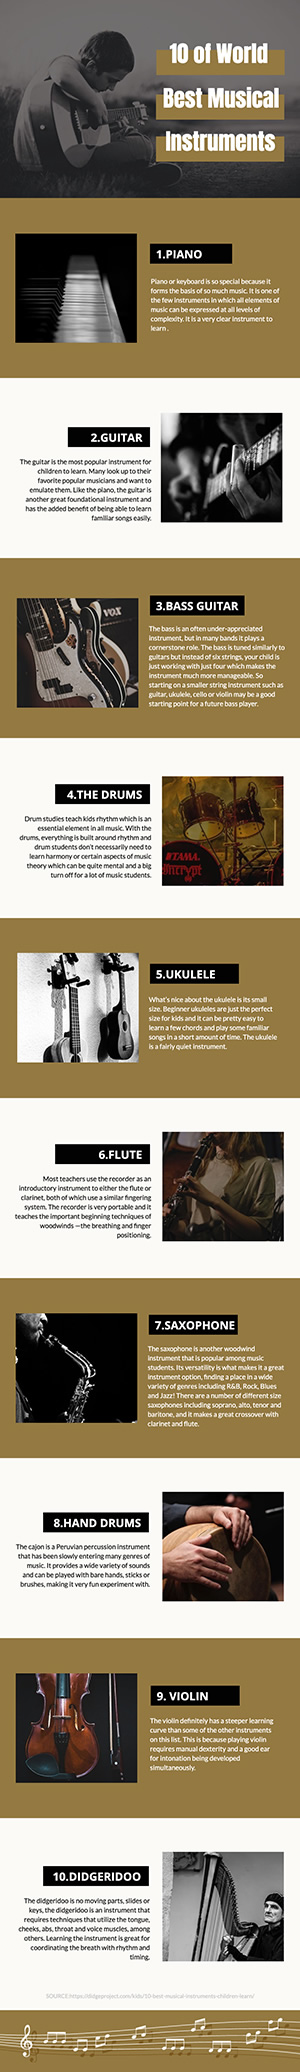 Music Instrument Infographic Design